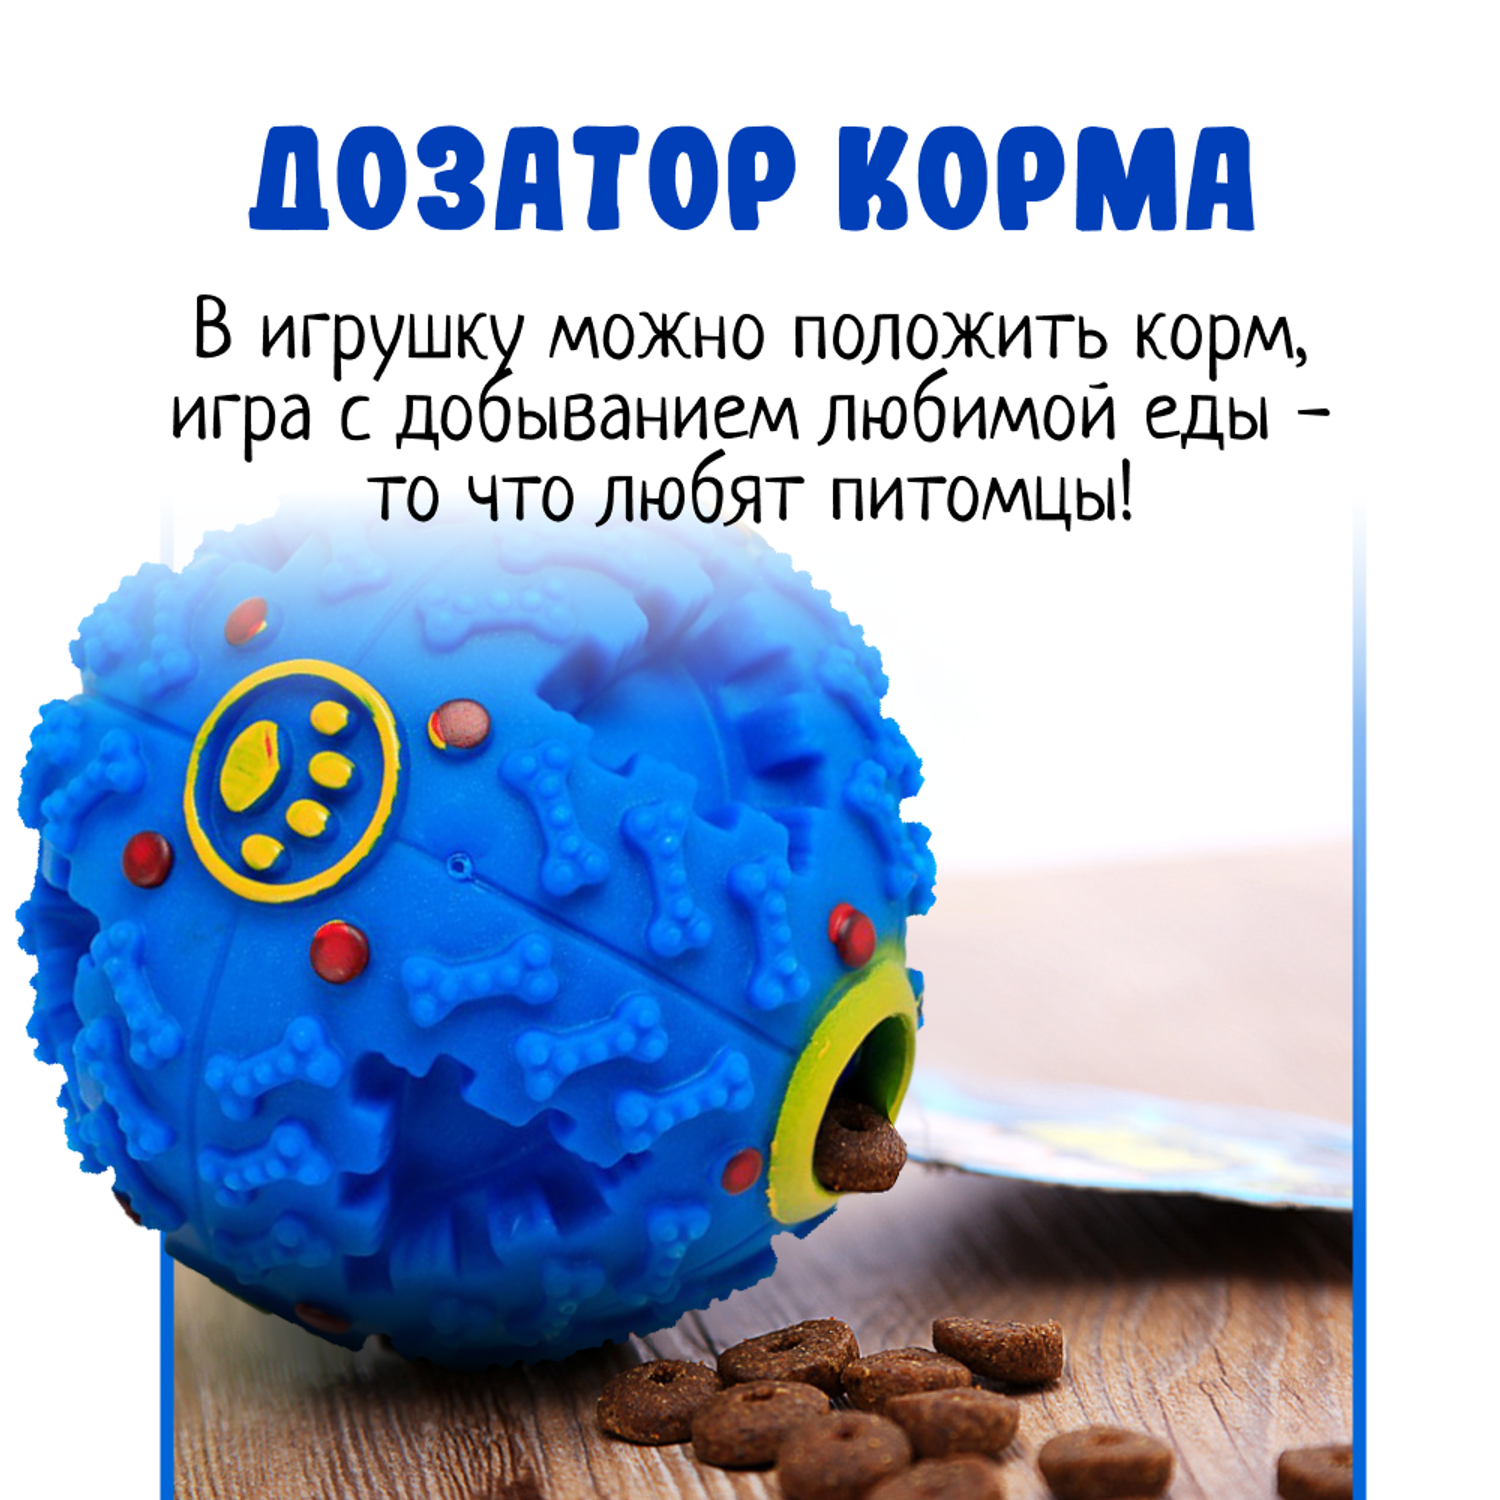 Игрушка мяч для собак ZDK дозирующий корм интерактивный ZooWell Play синий 9 см крякающий - фото 3